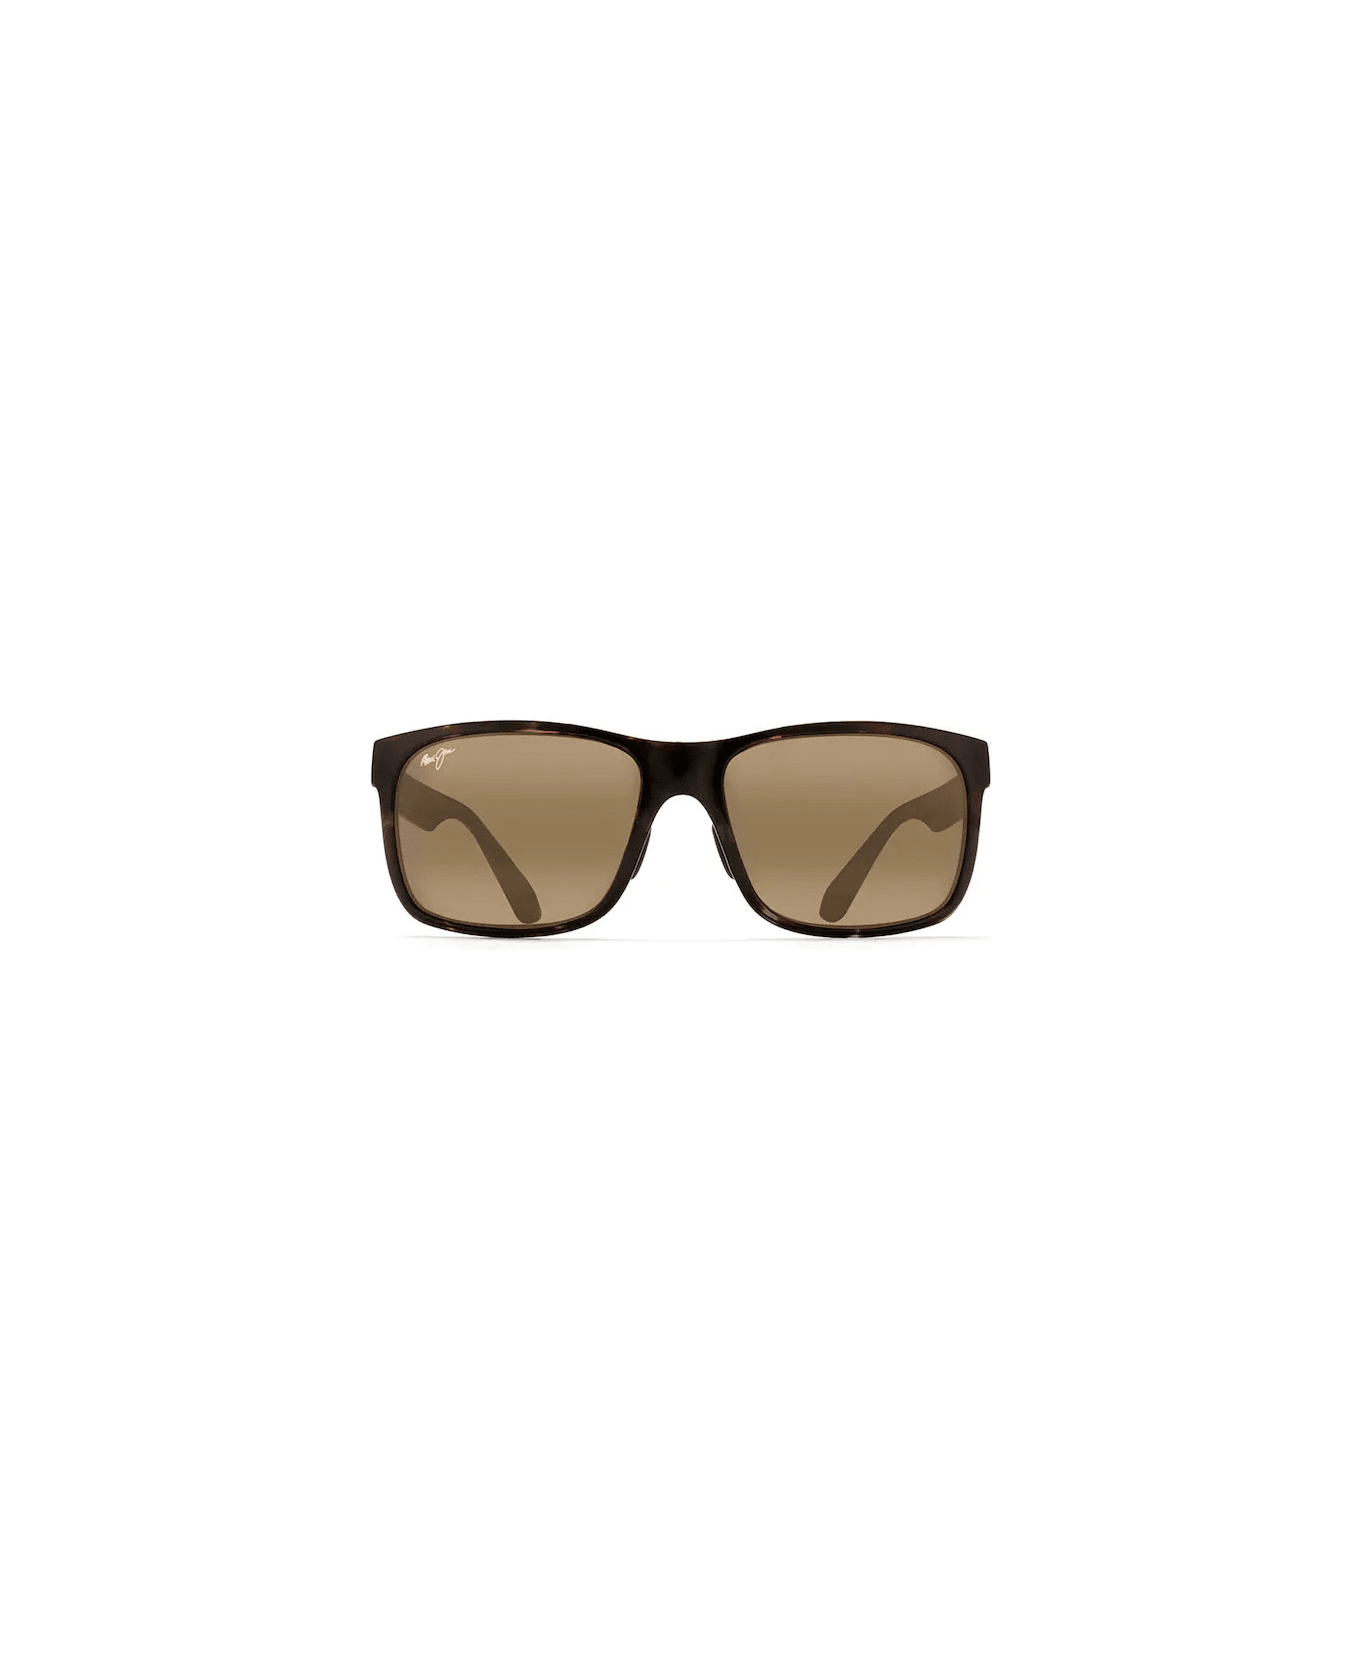 Maui Jim Red sands H432-11T Sunglasses - Tartarugato grigio サングラス